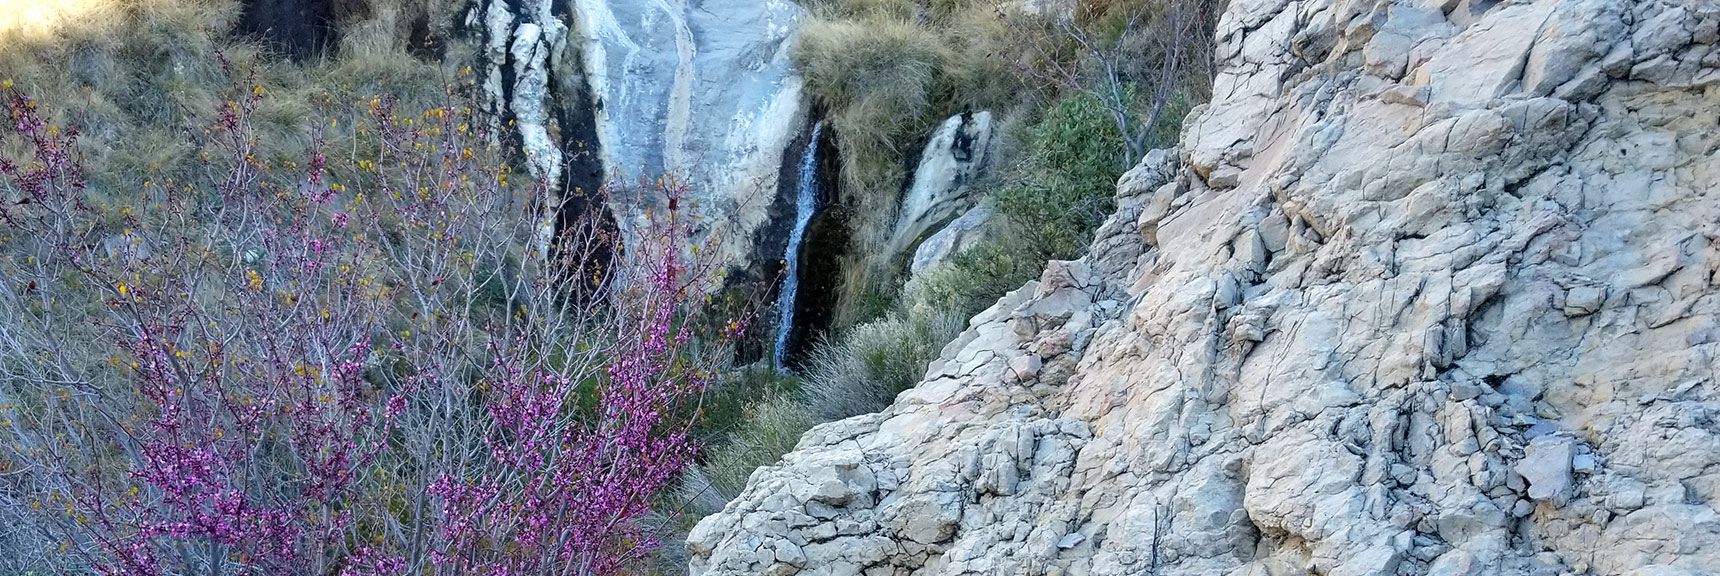 Waterfall at La Madre Mt Springs, Red Rock Nat Pk, NV